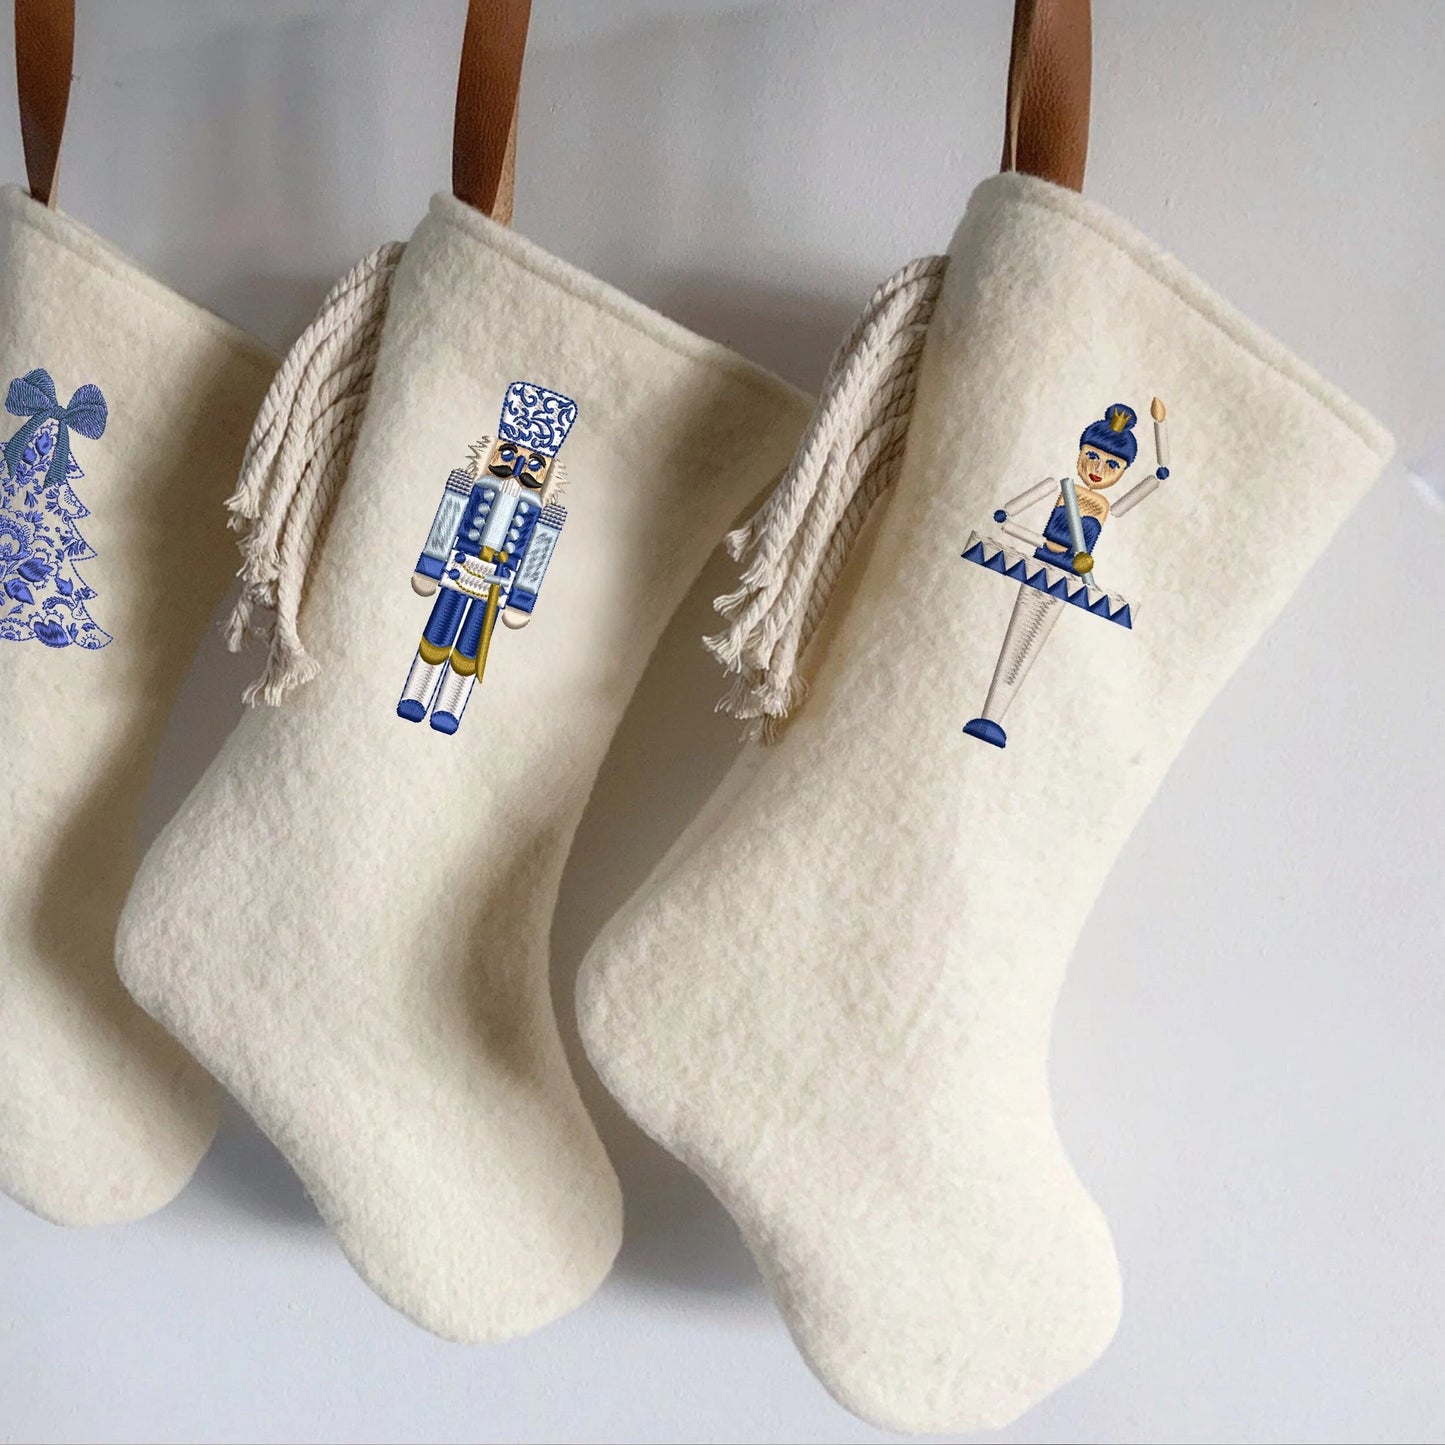 Christmas Nutcracker and Ballerina machine embroidery design set on Christmas stockings